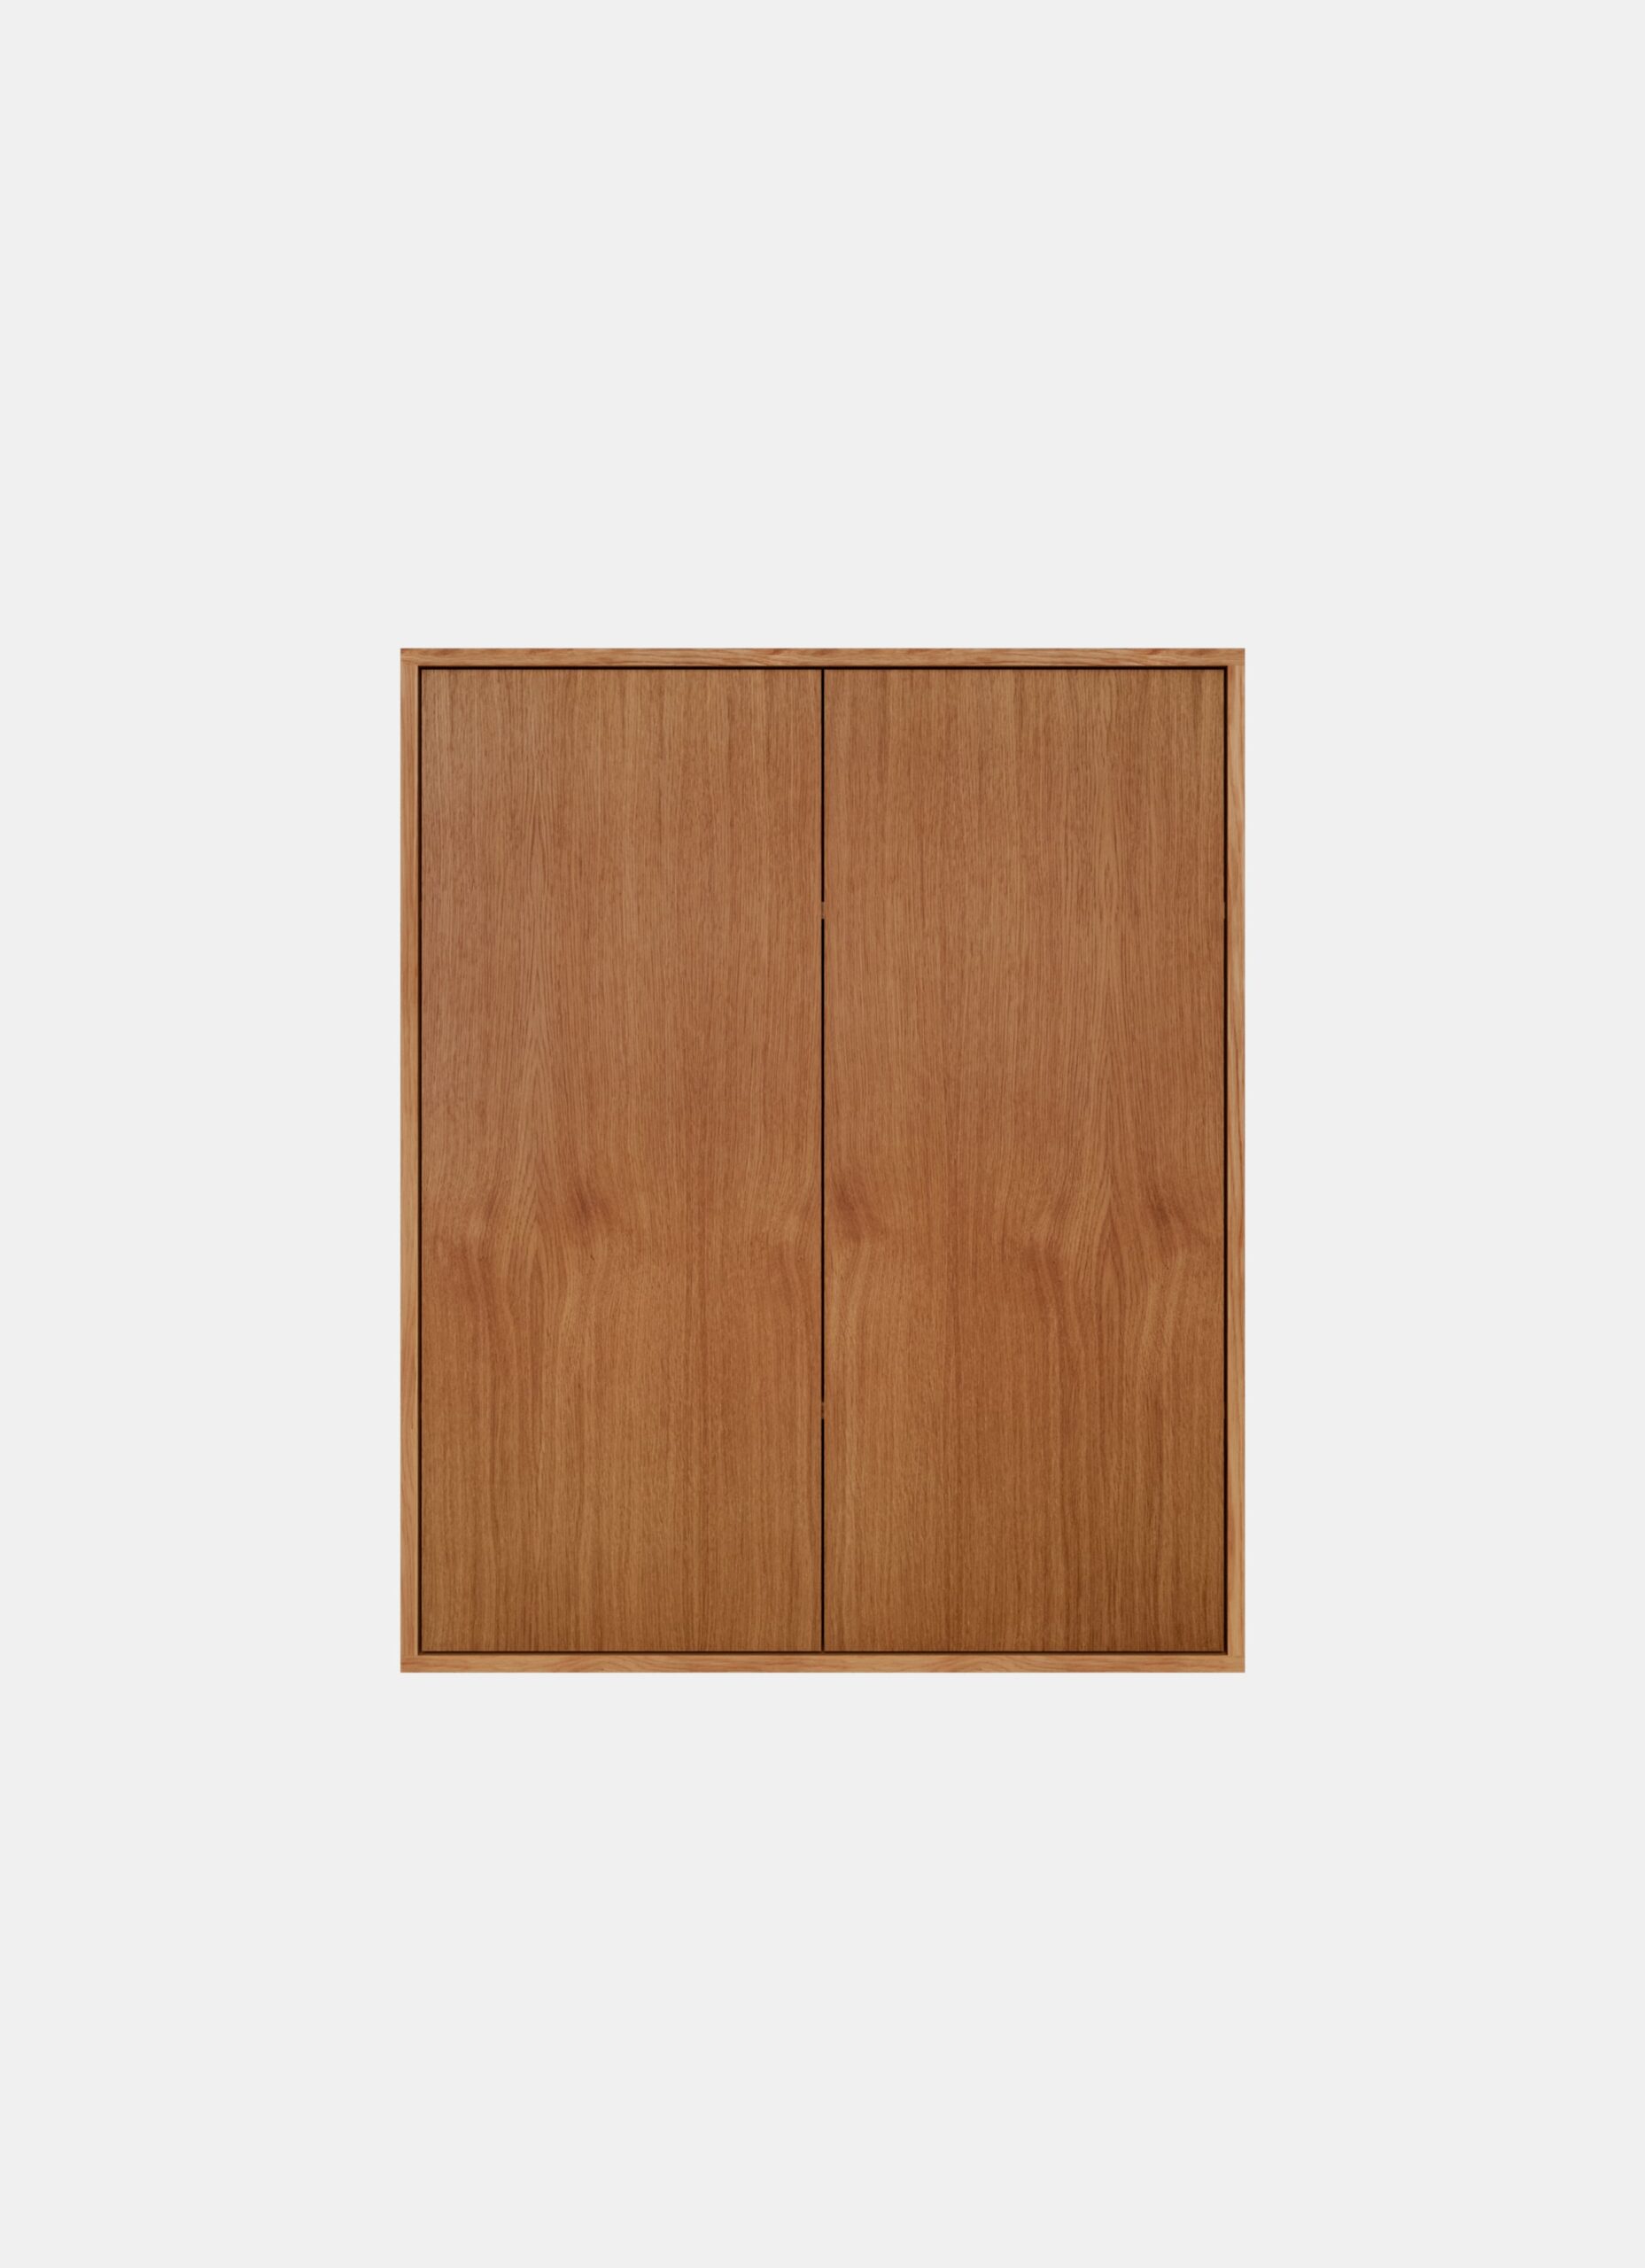 Frama - Shelf Library Cabinet - Natural Oak - Large